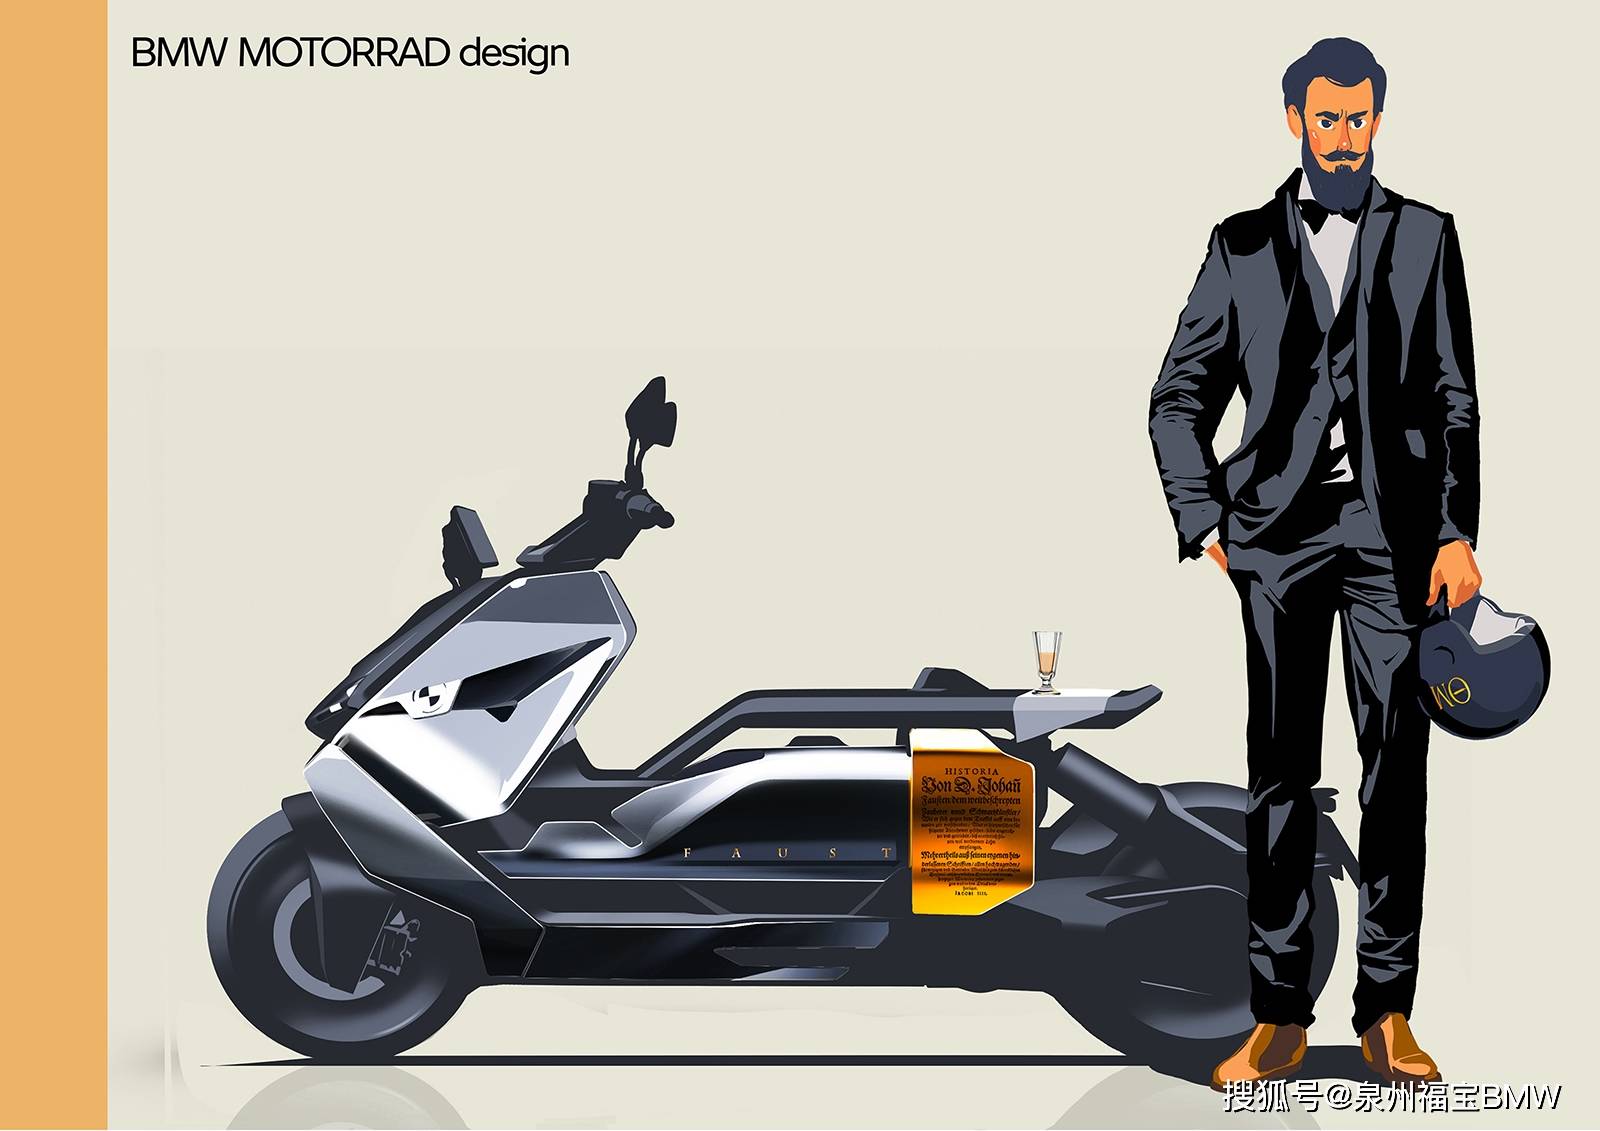 bmw motorrad已着眼未来,通过concept e概念车率先展示了电动摩托车的